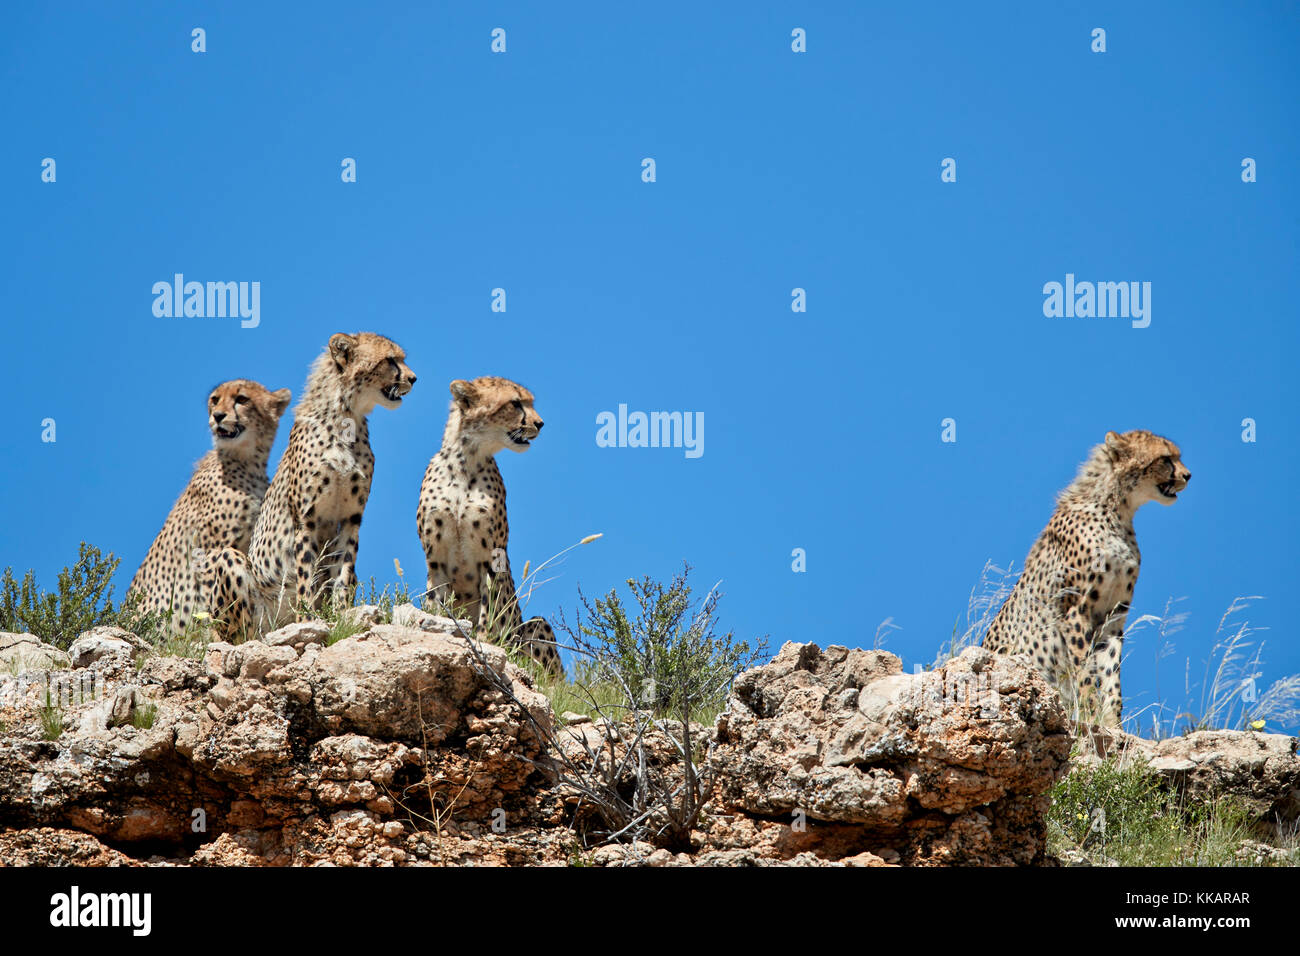 Four Cheetah (Acinonyx jubatus), Kgalagadi Transfrontier Park, South Africa, Africa Stock Photo